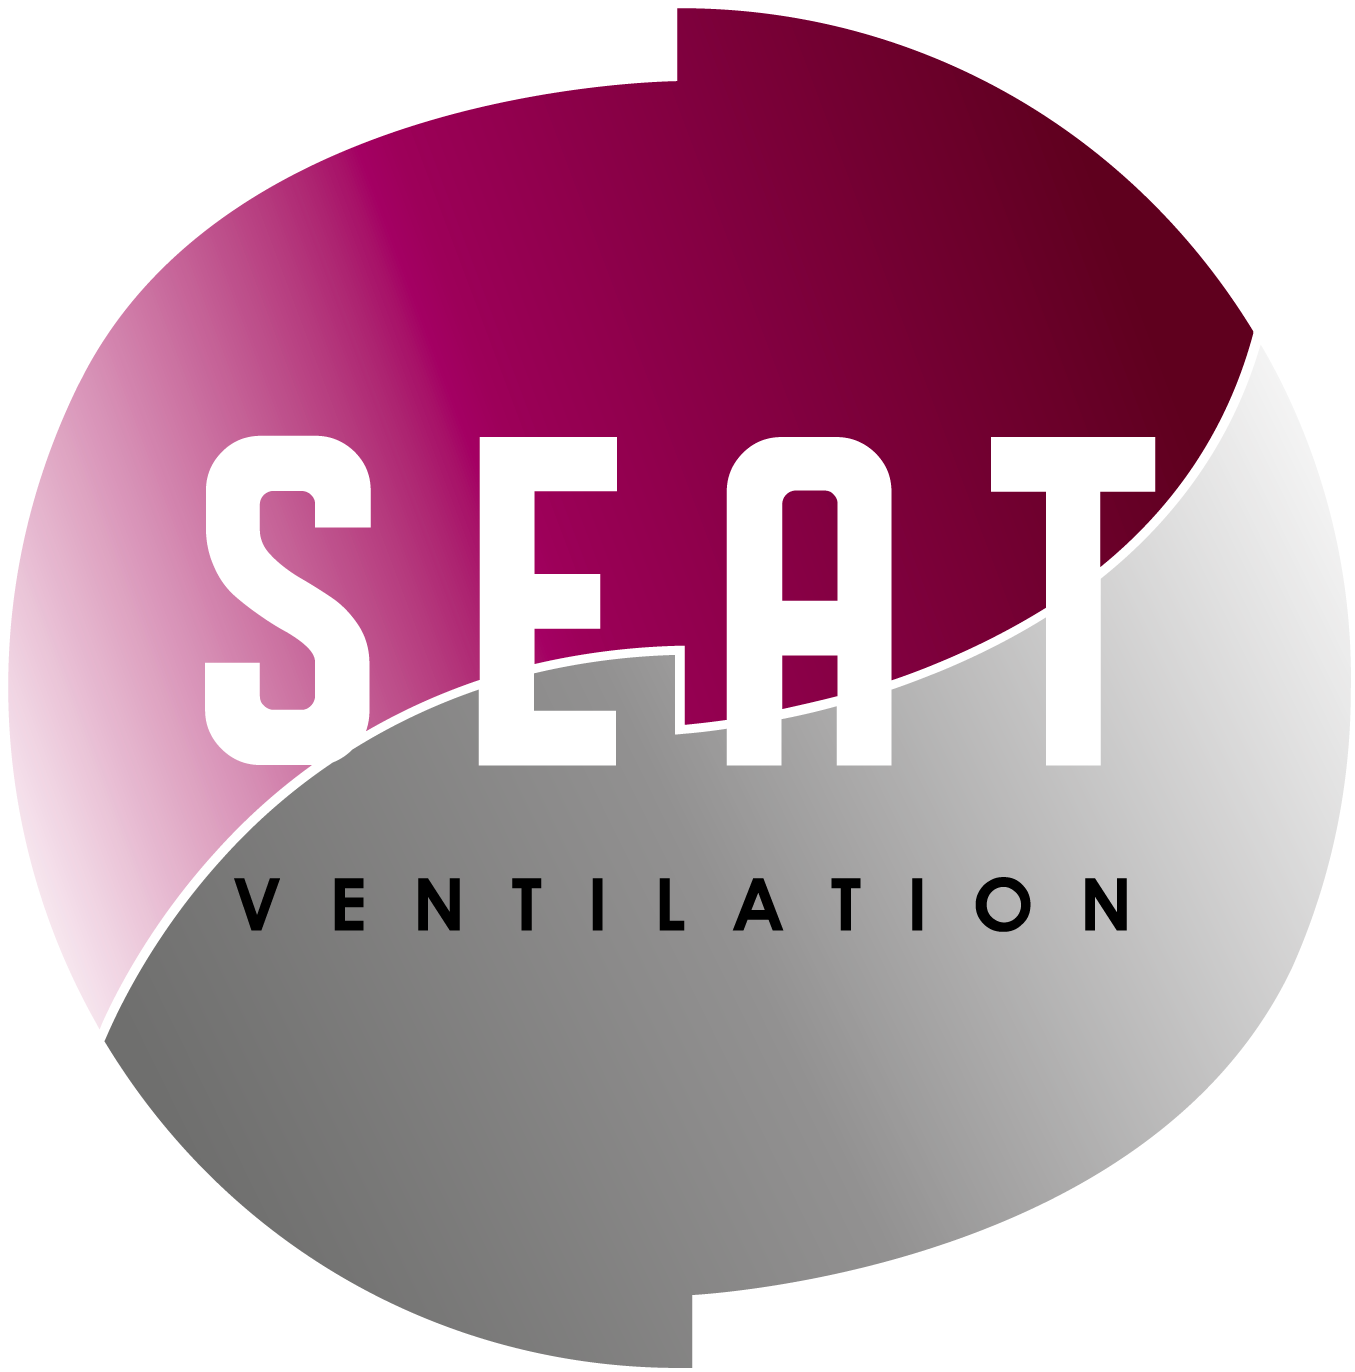 SEAT ventilation